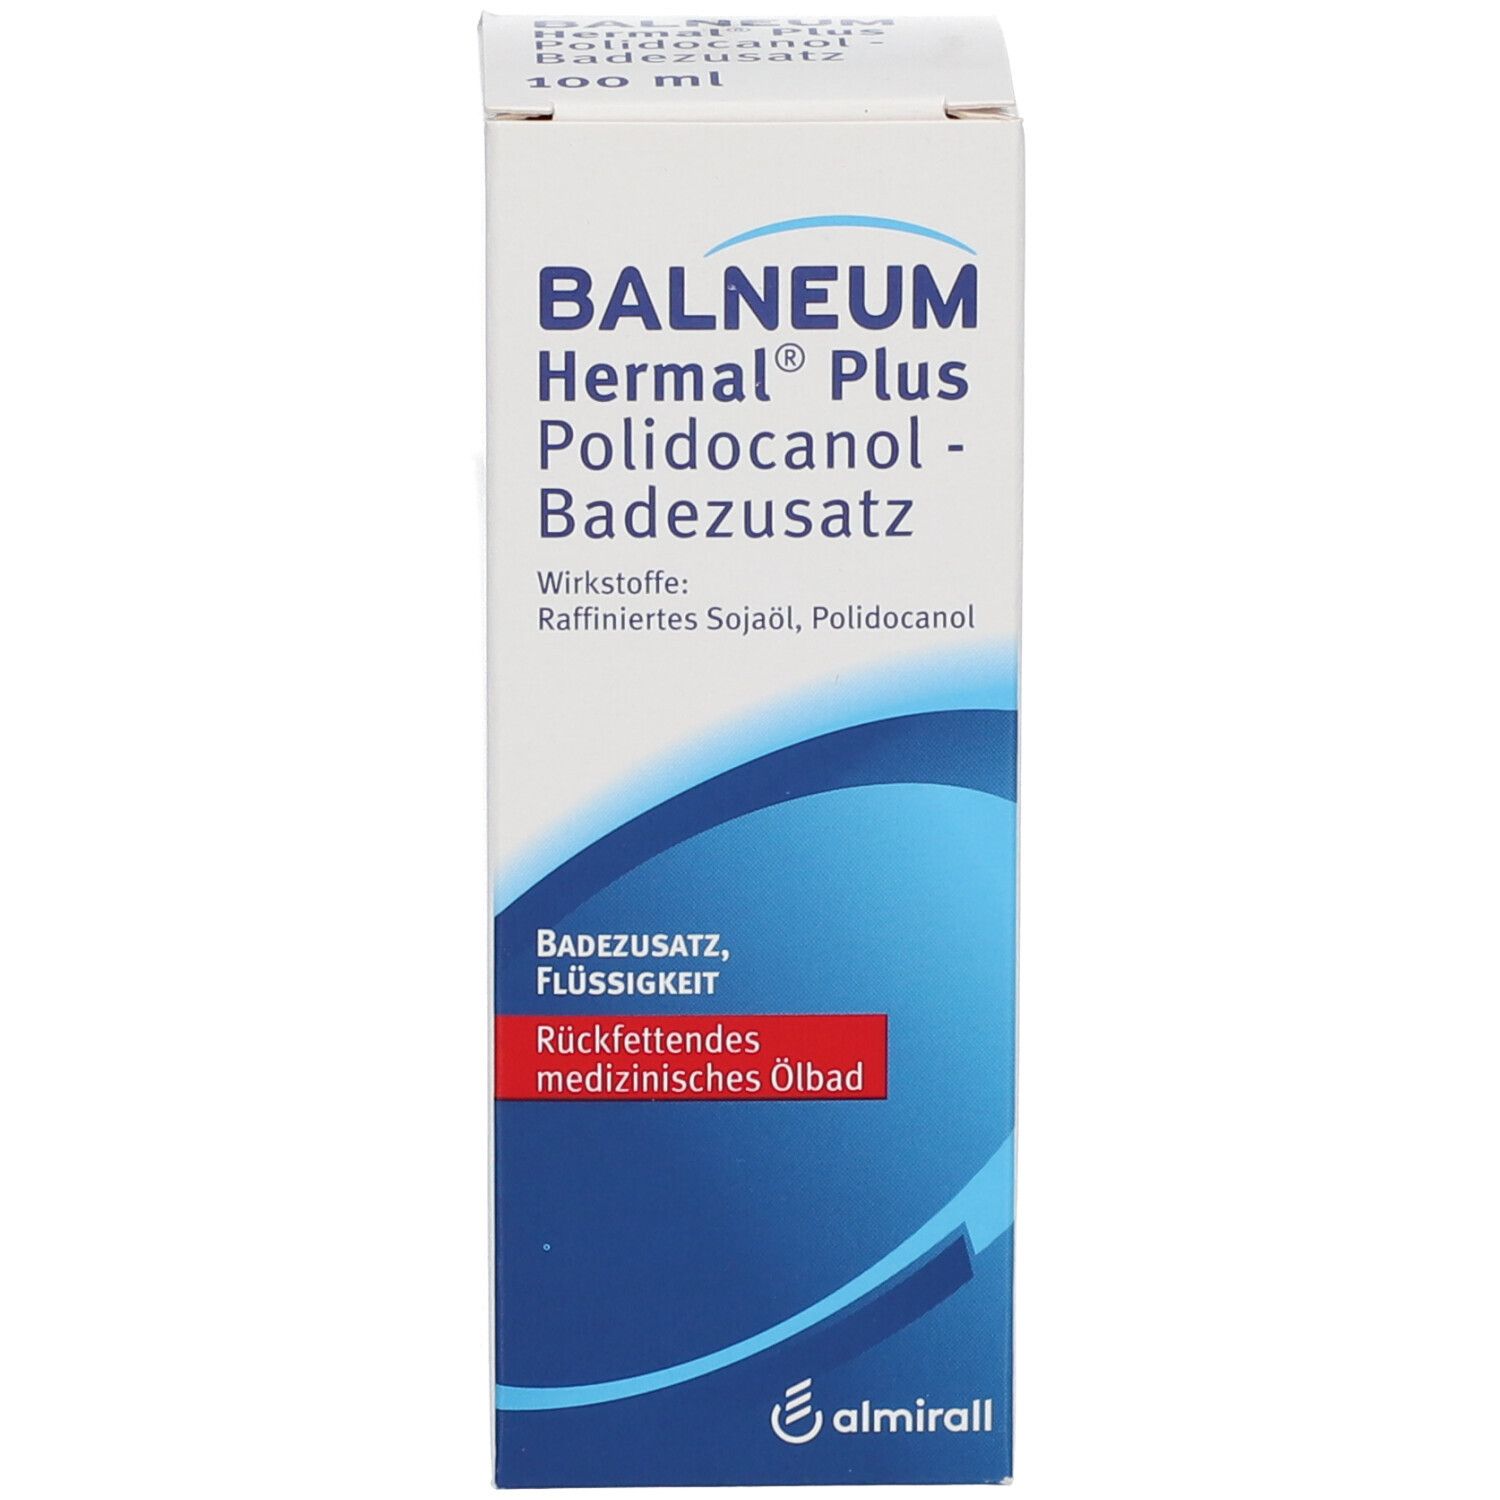 BALNEUM Hermal® Plus